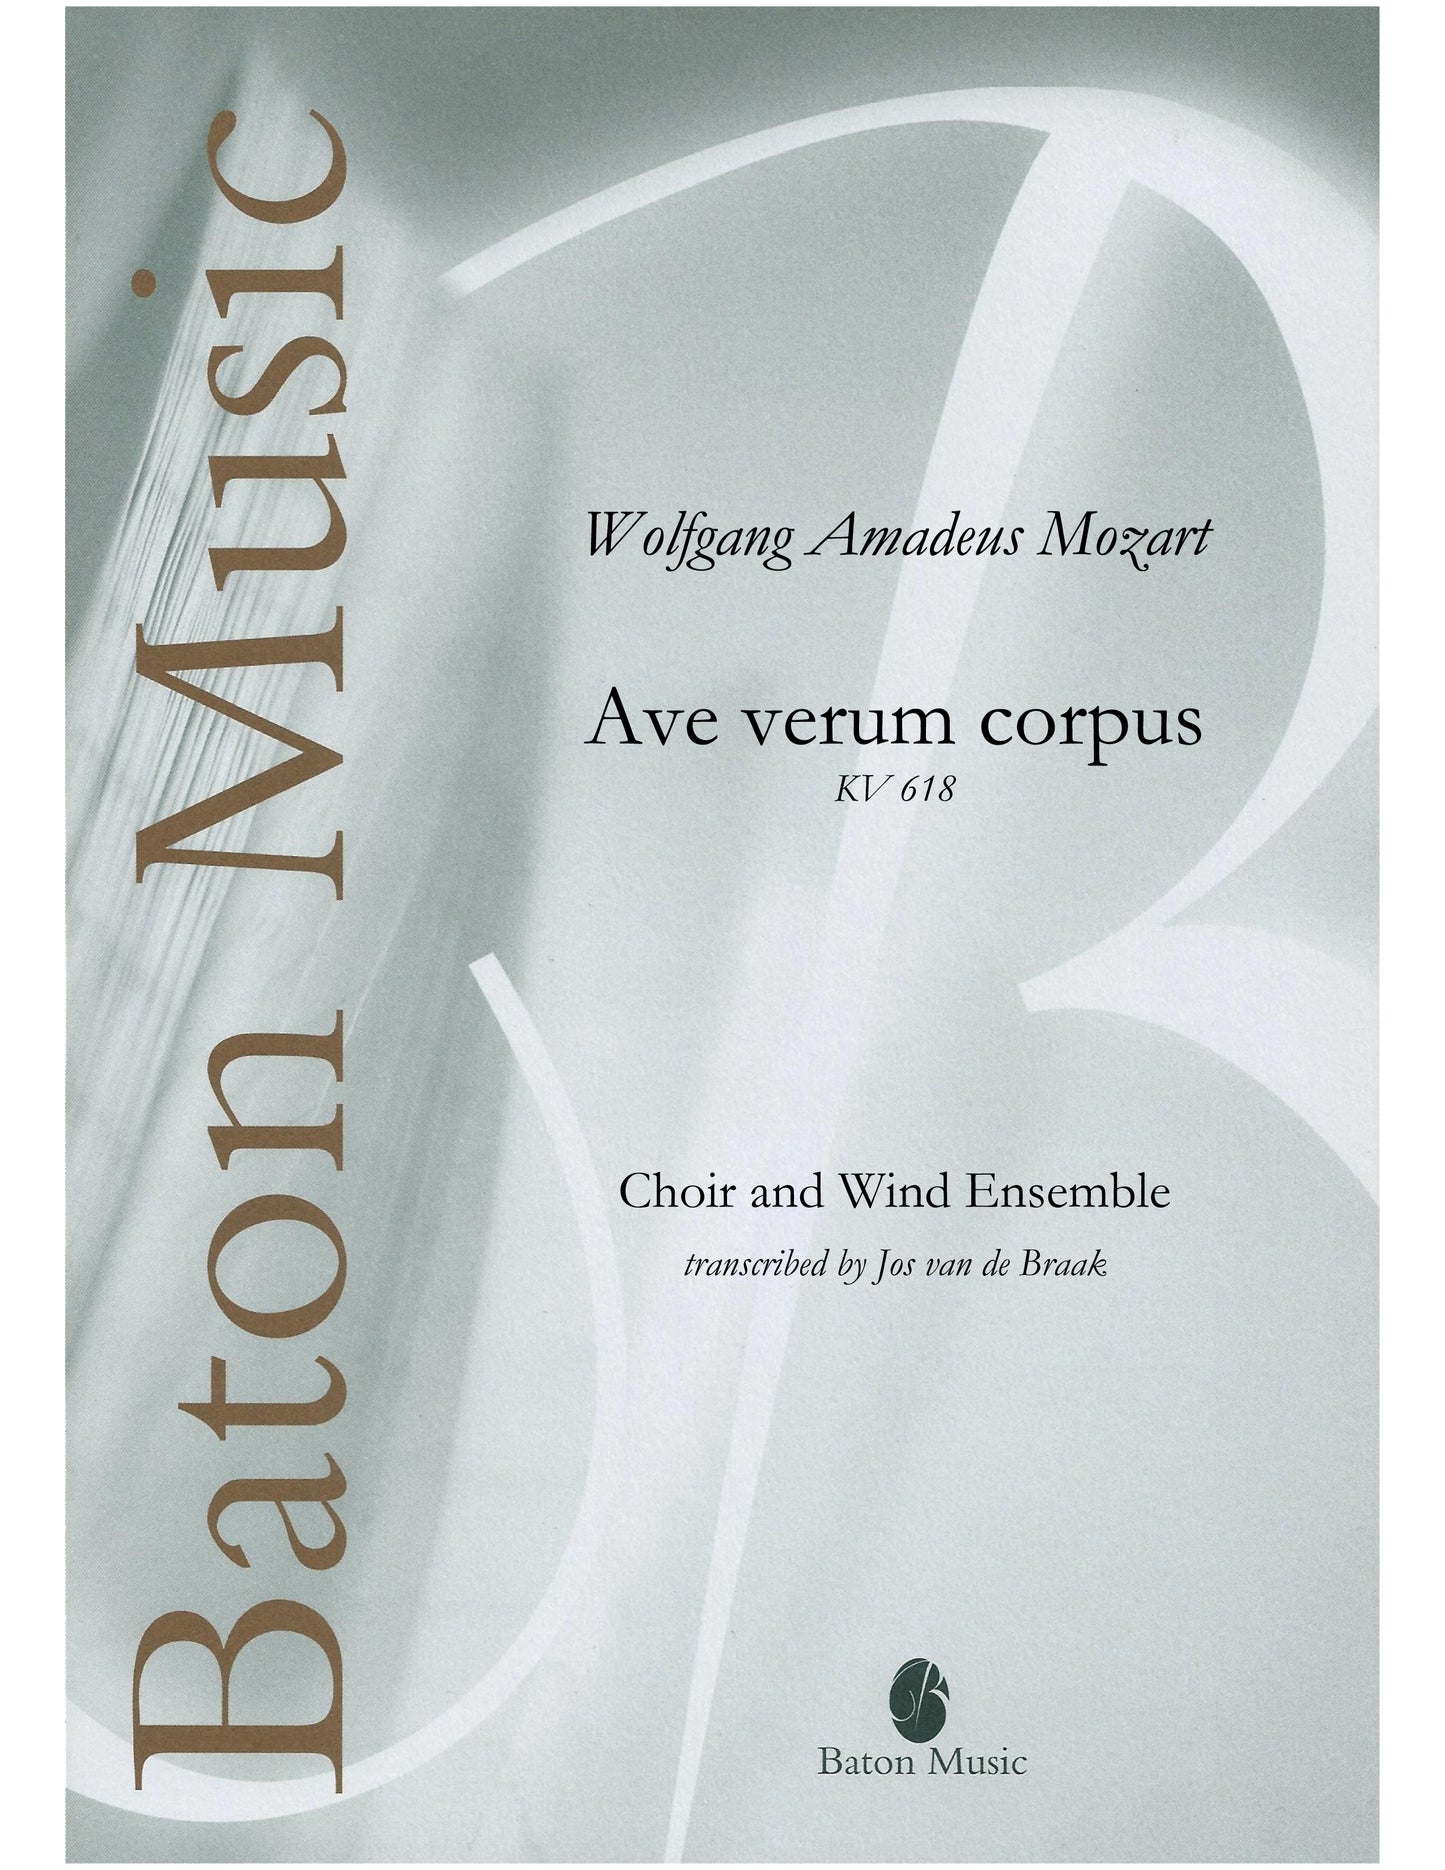 Ave verum corpus - W. A. Mozart (KV 618)